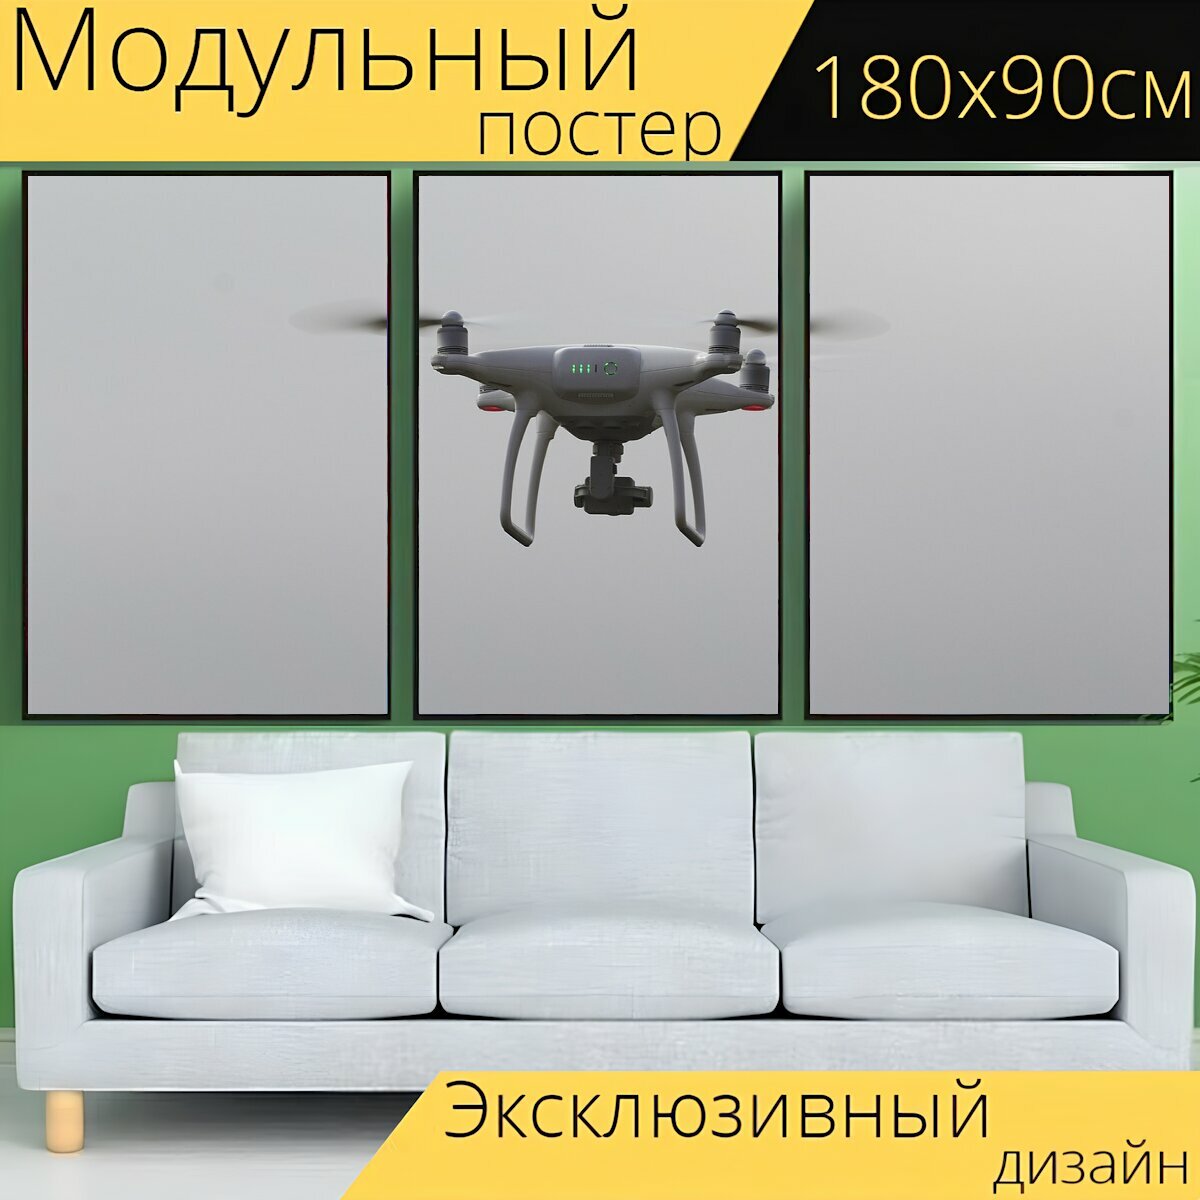 Модульный постер "Дрон, мультикоптер, квадрокоптер" 180 x 90 см. для интерьера